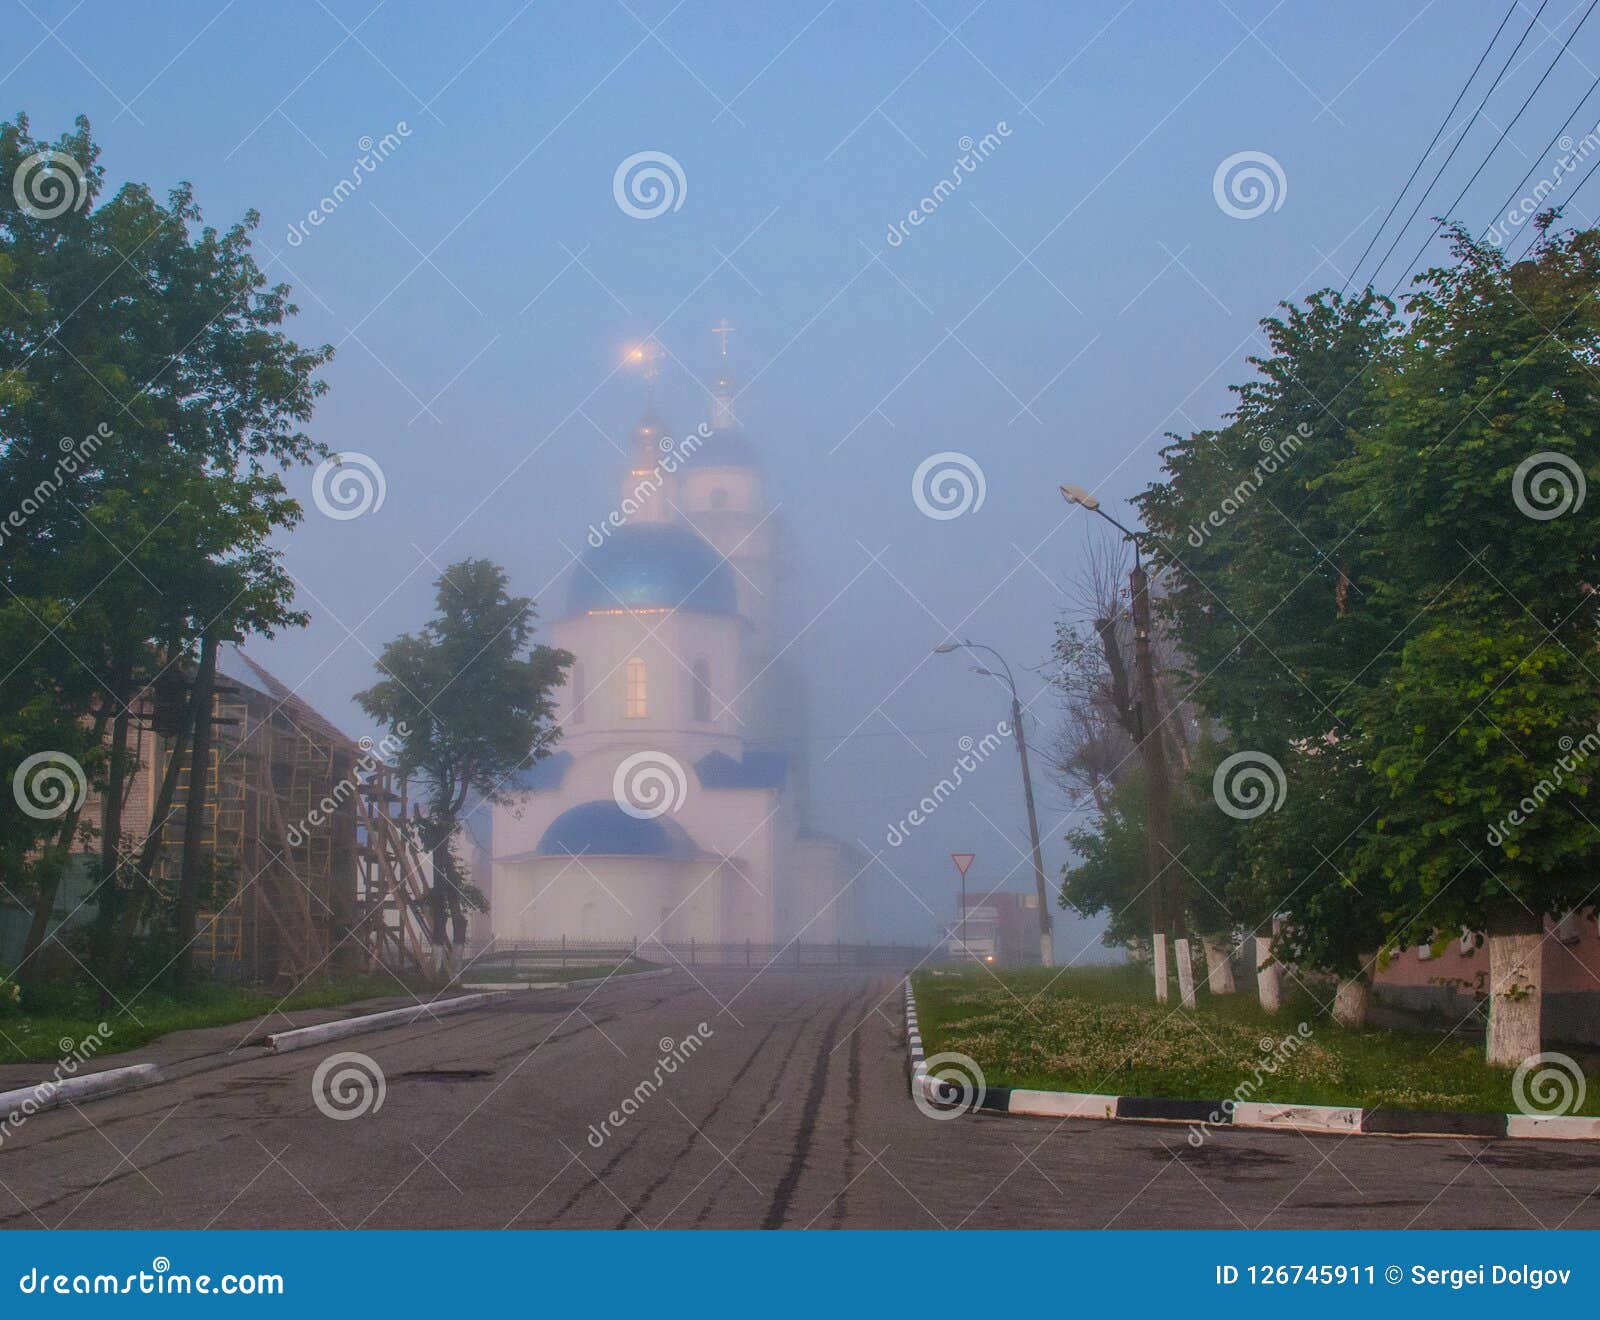 orthodox church foggy morning road truck morning